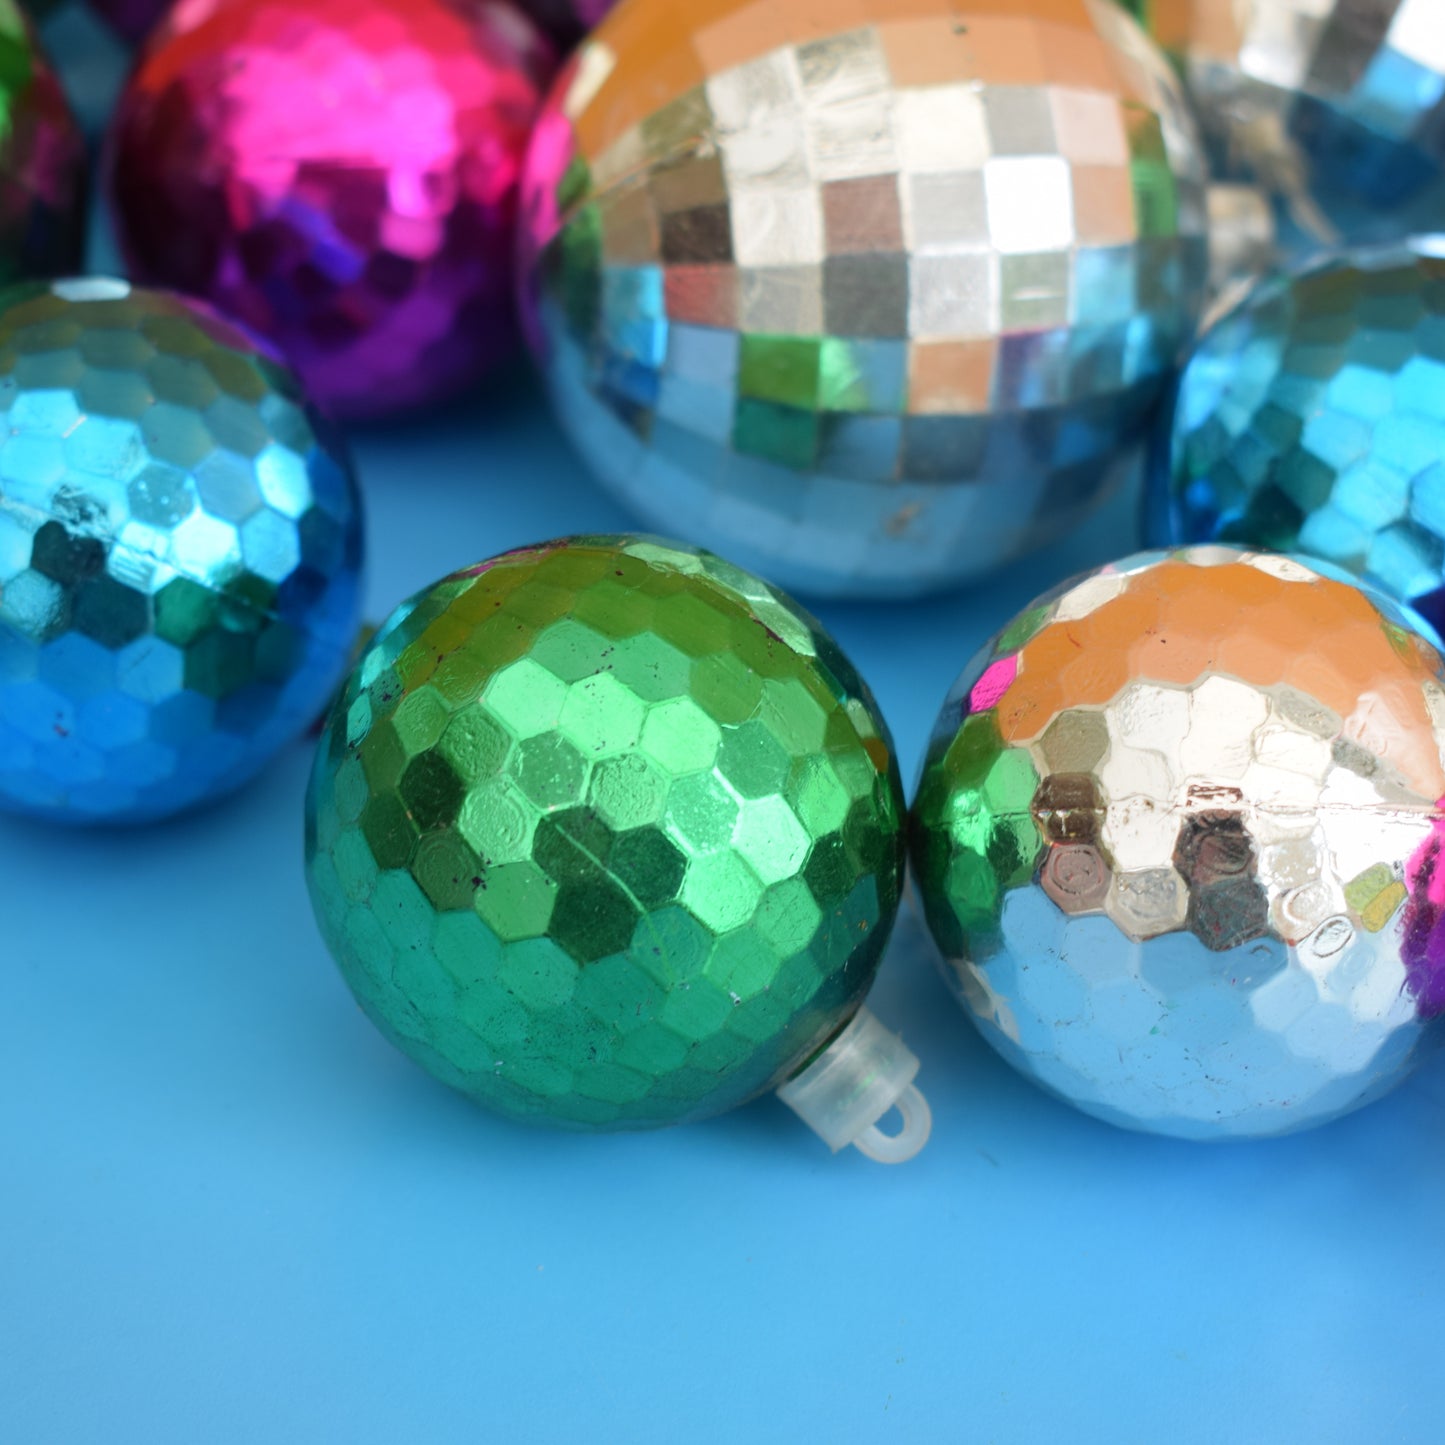 Vintage 1970s Plastic Christmas Disco Balls x13